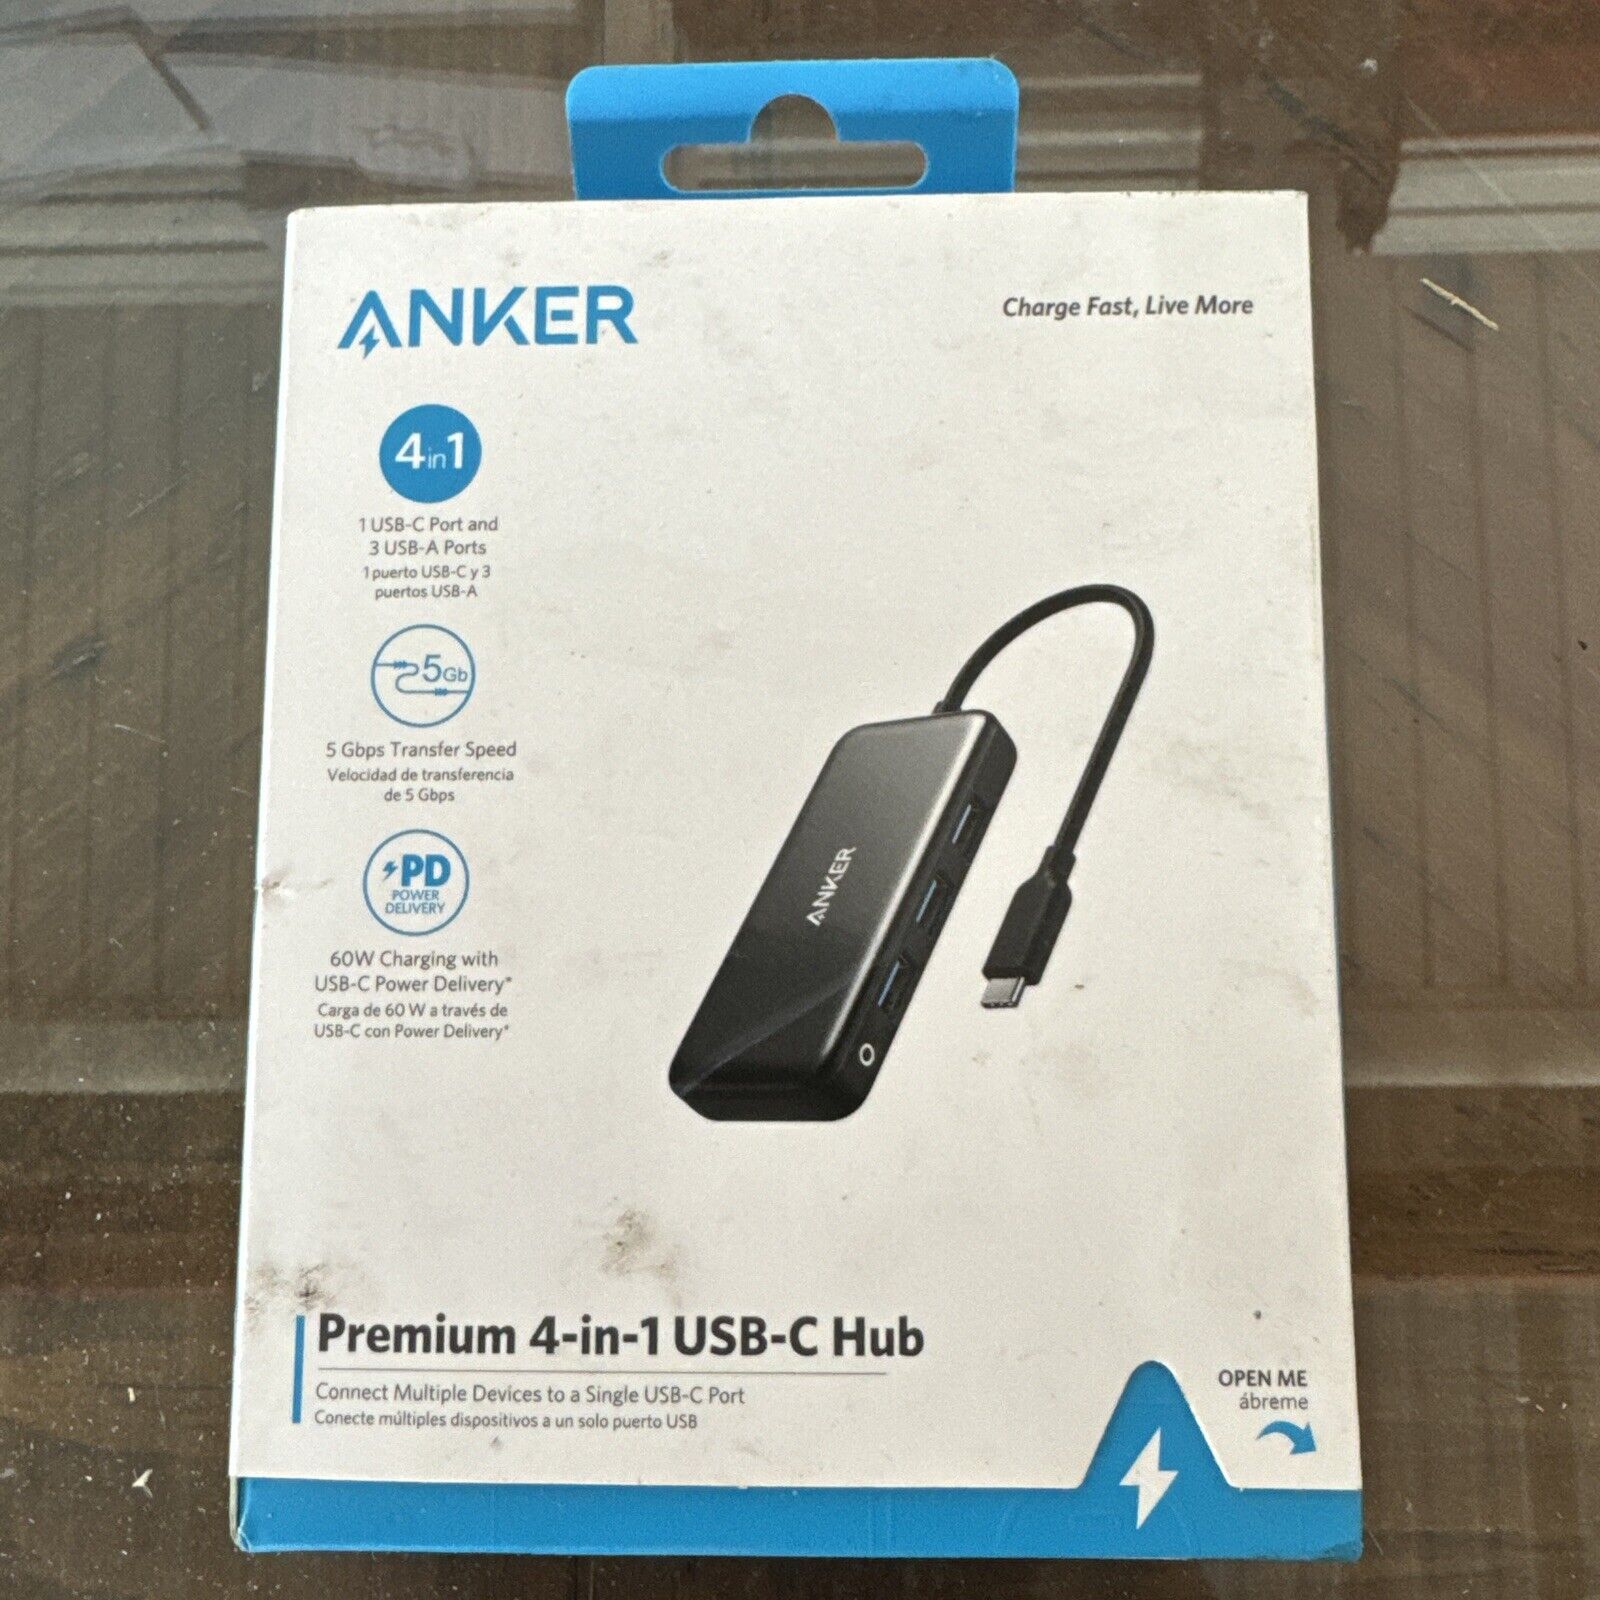 Anker 4-in-1 Premium USB-C Hub, 5 Gbps Transfer Speed, 60W Charging.